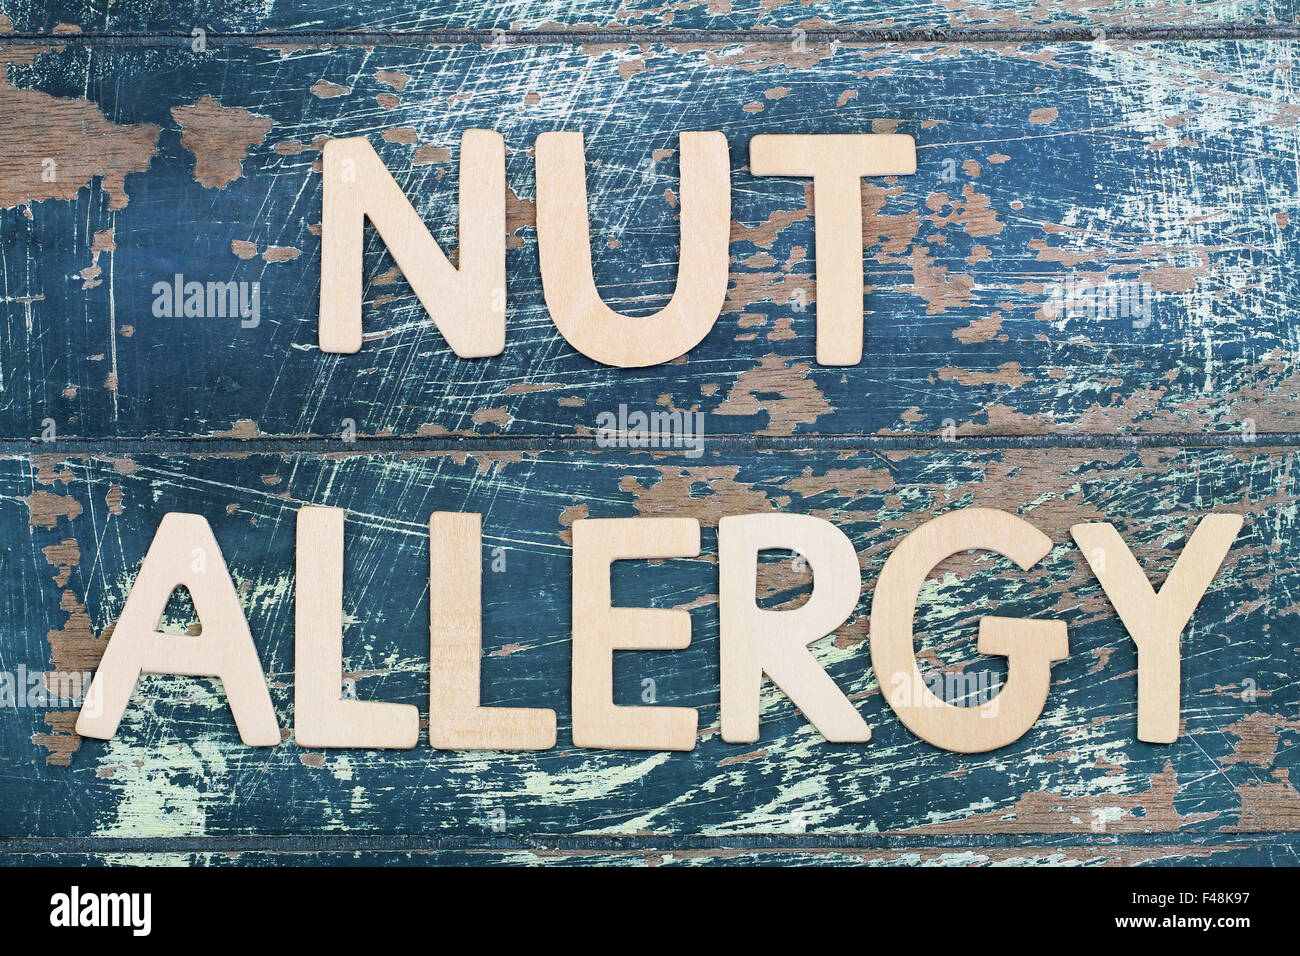 Nut allergy written on rustic wooden surface Stock Photo